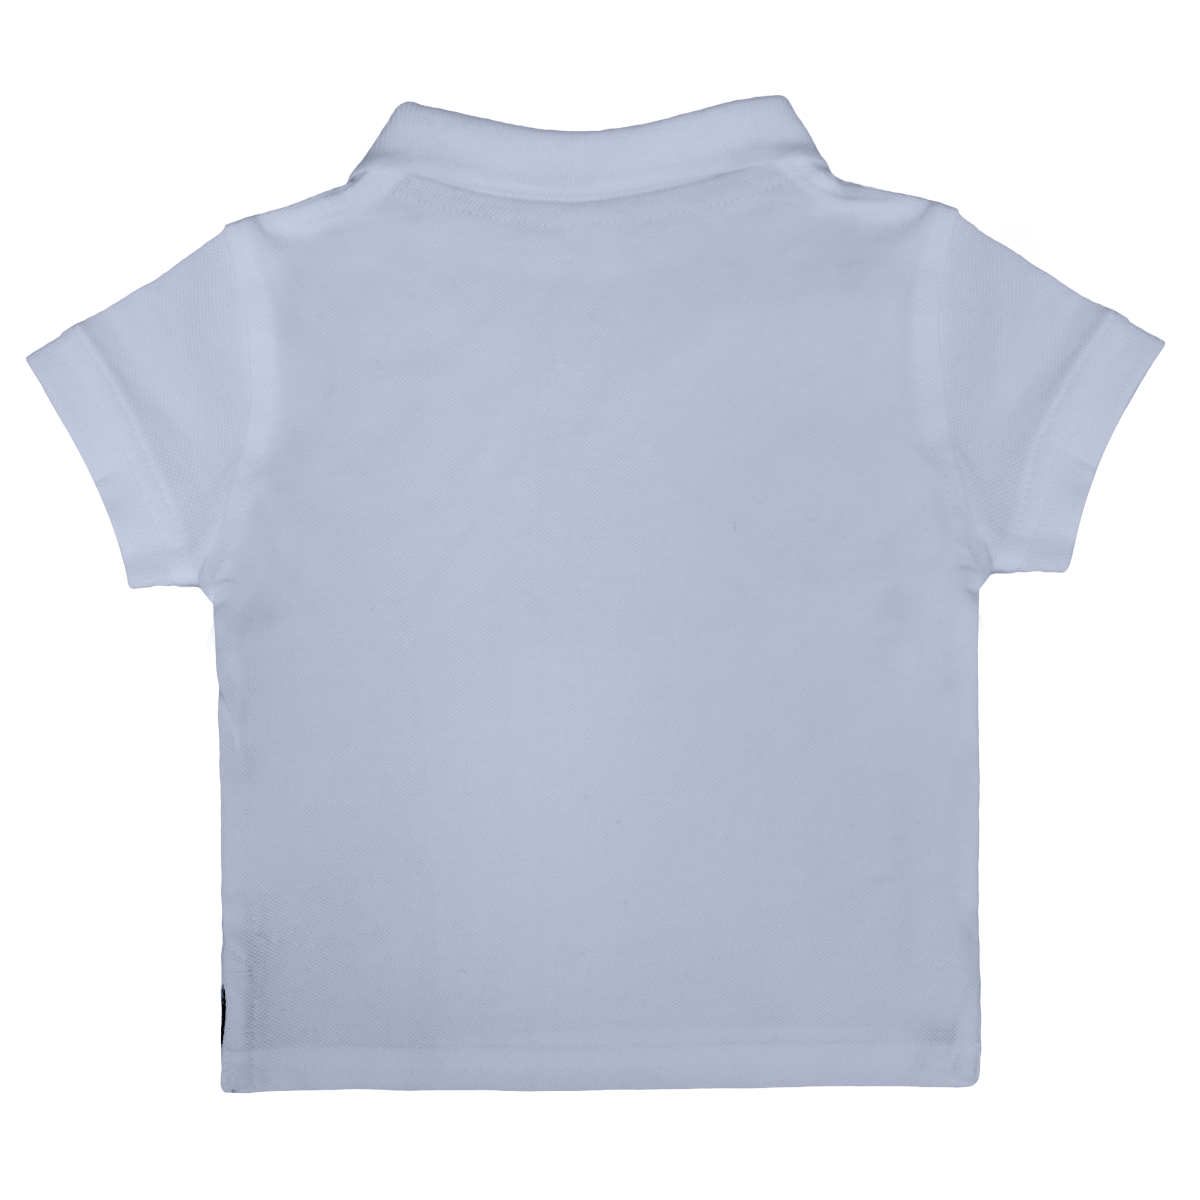 Customizable Polo Shirt For Baby Boy And Girl Sky Blue